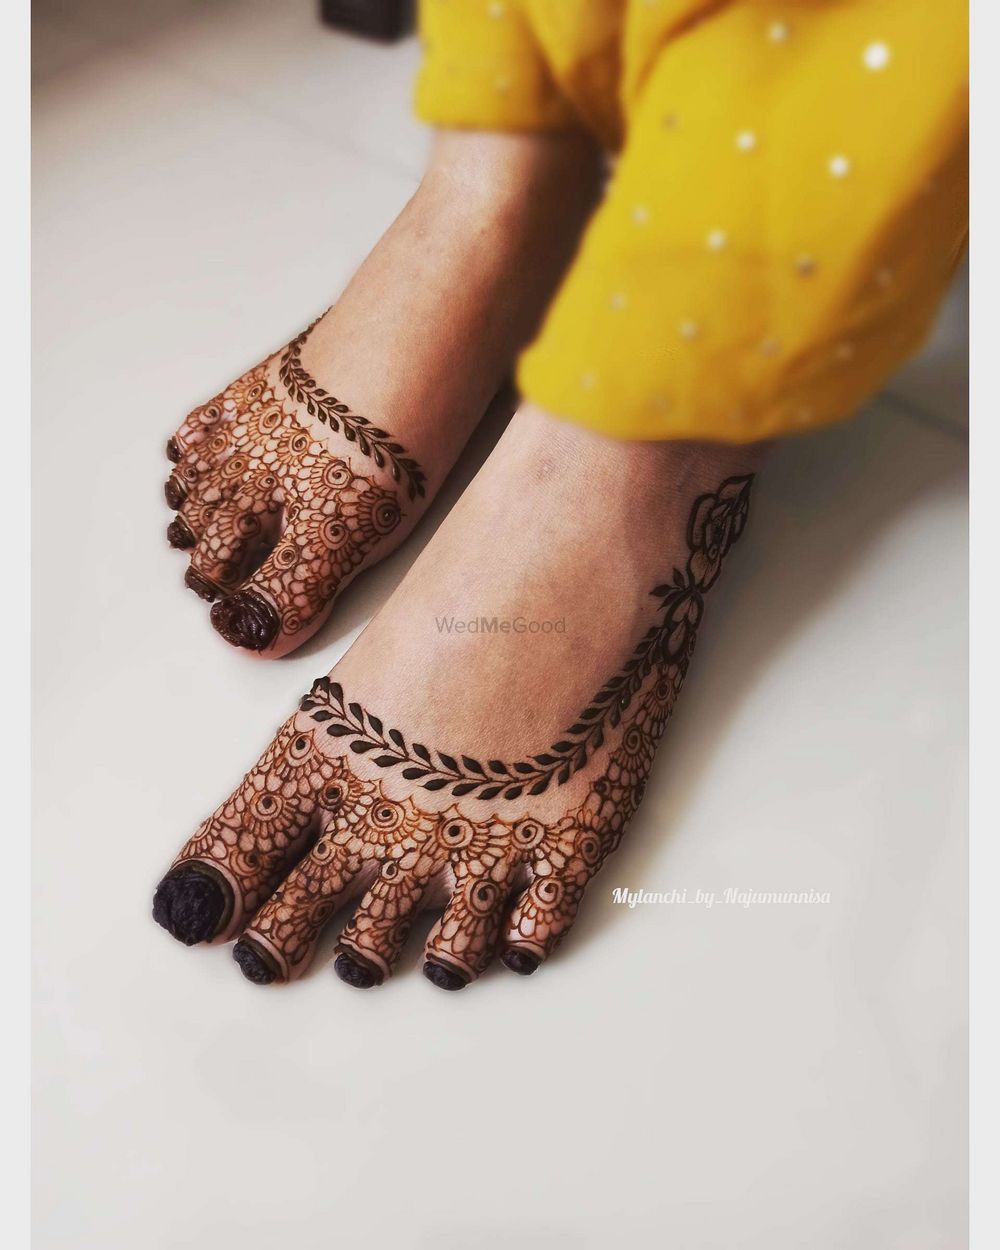 Photo From feet henna - By Mylanchi by Najumunnisa